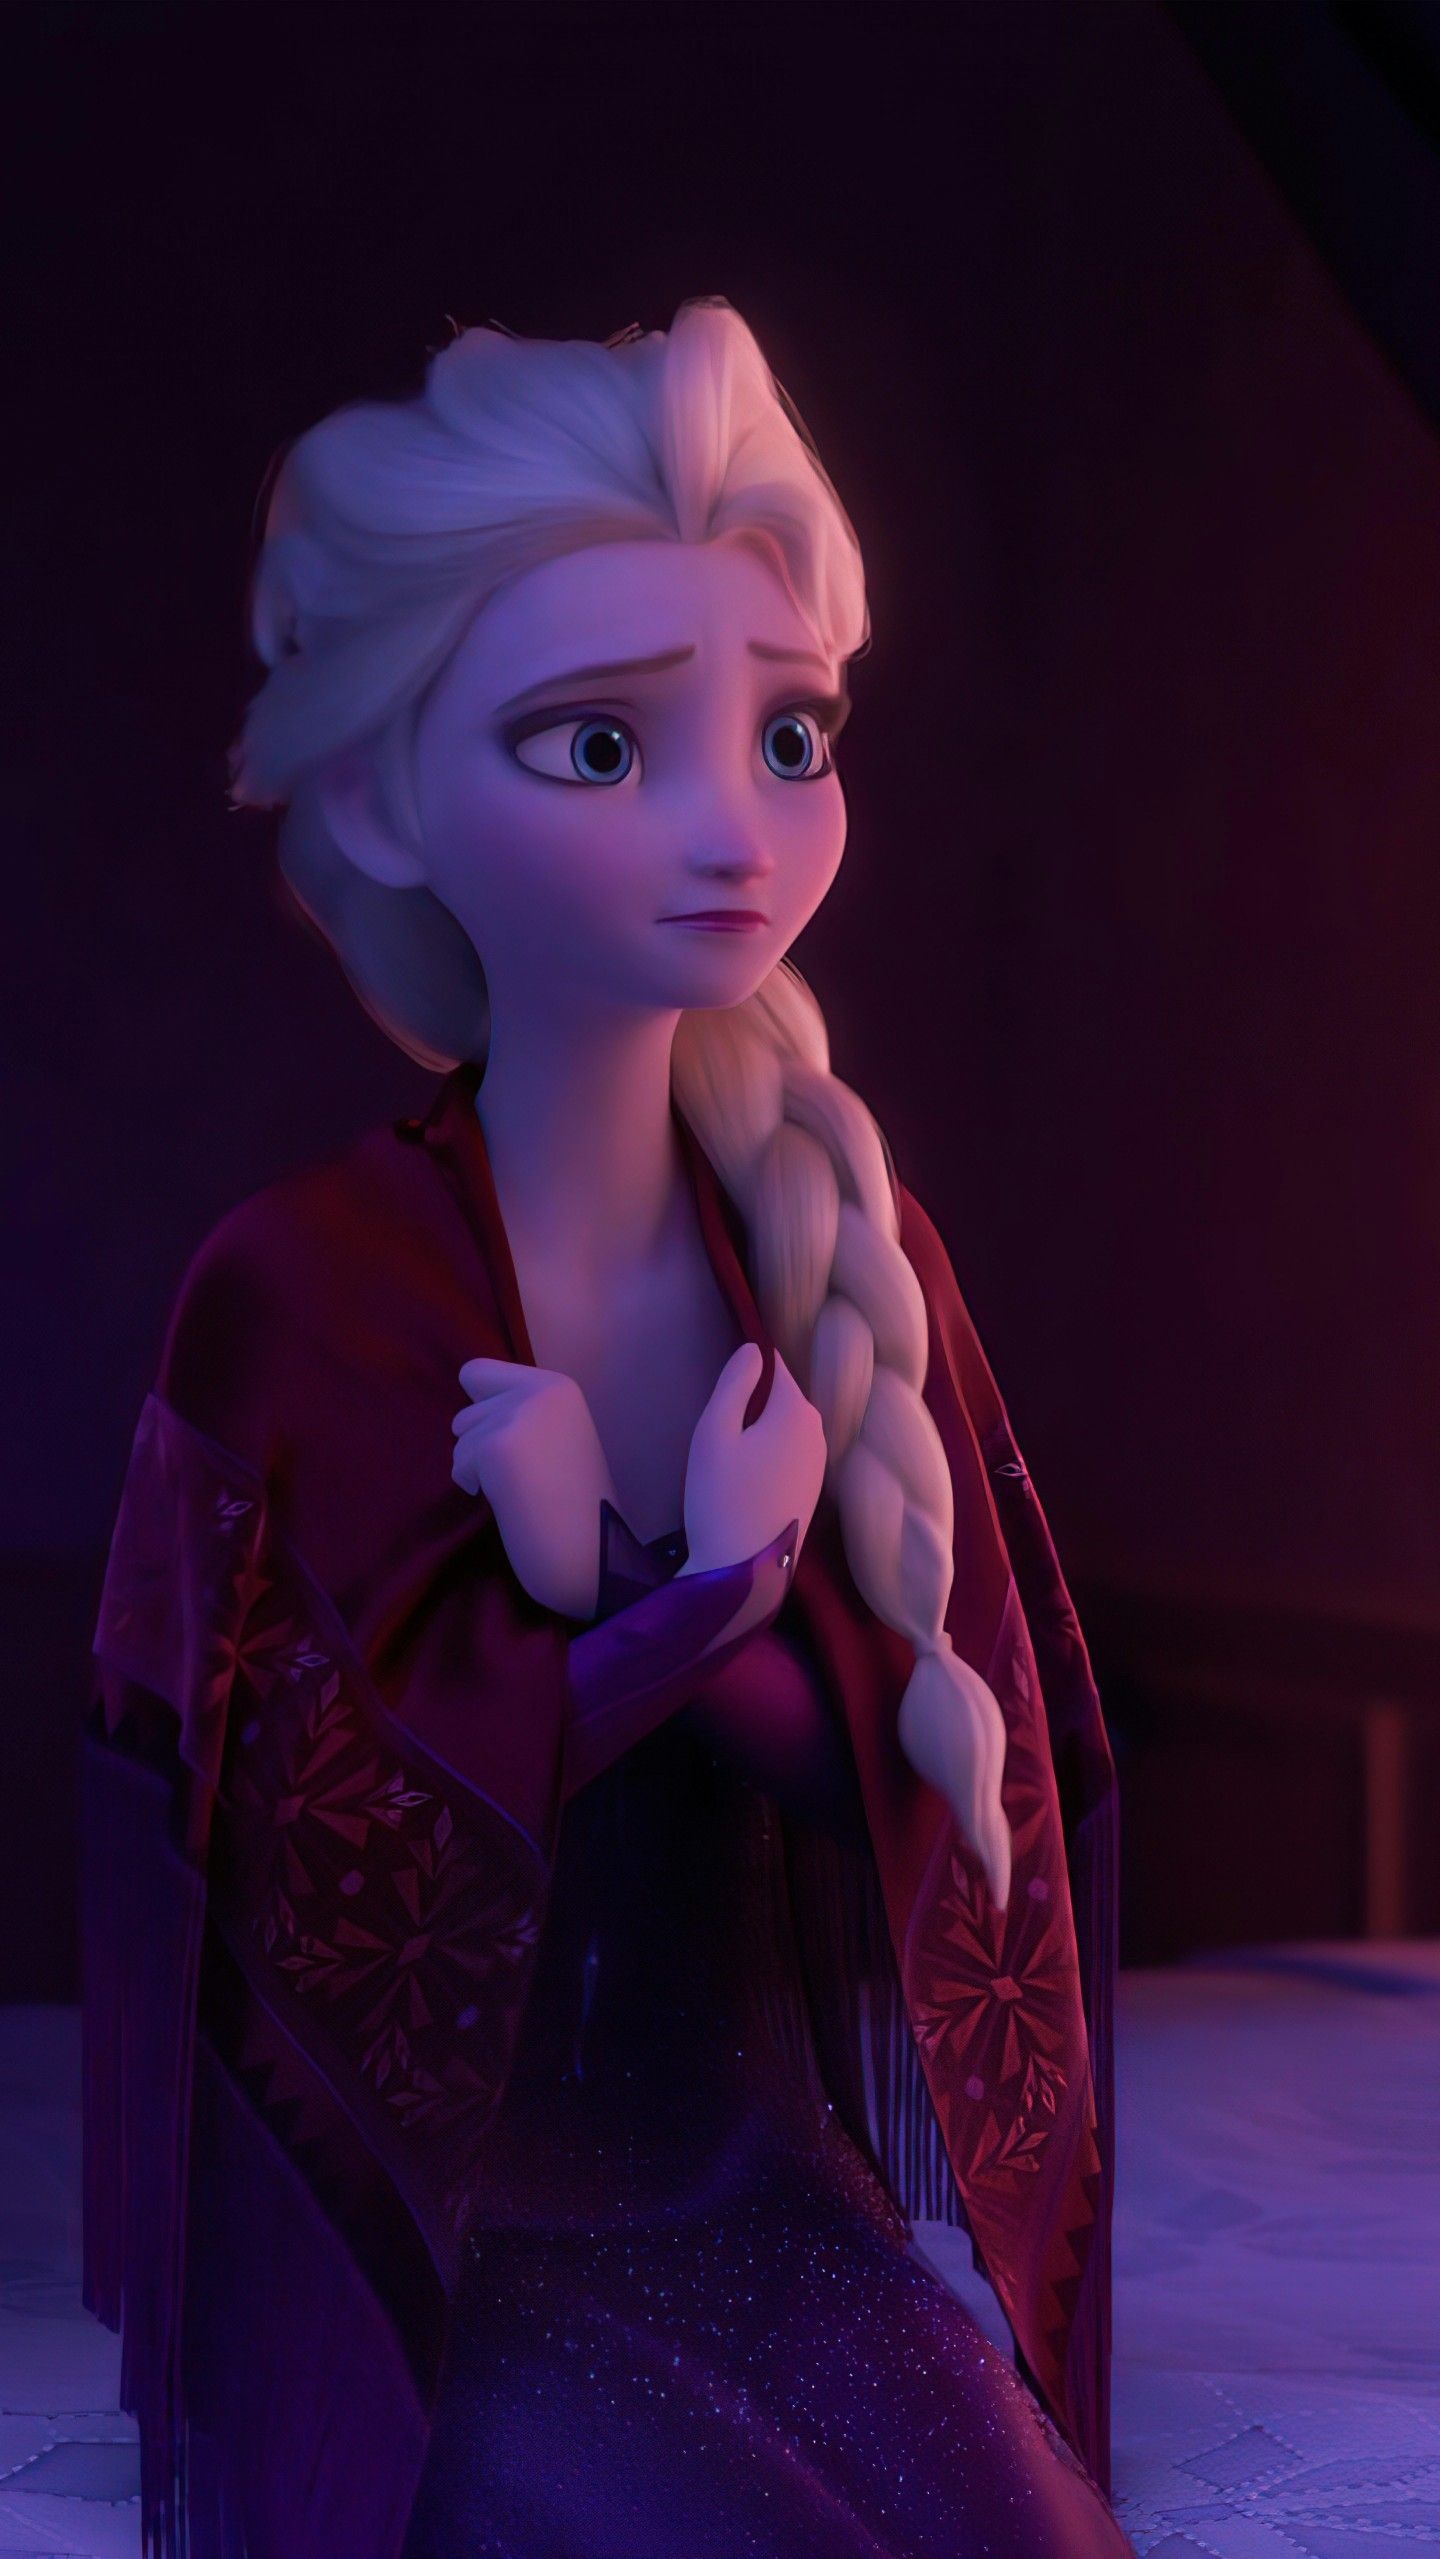 Elsa (Frozen) Wallpapers (65+ images inside)